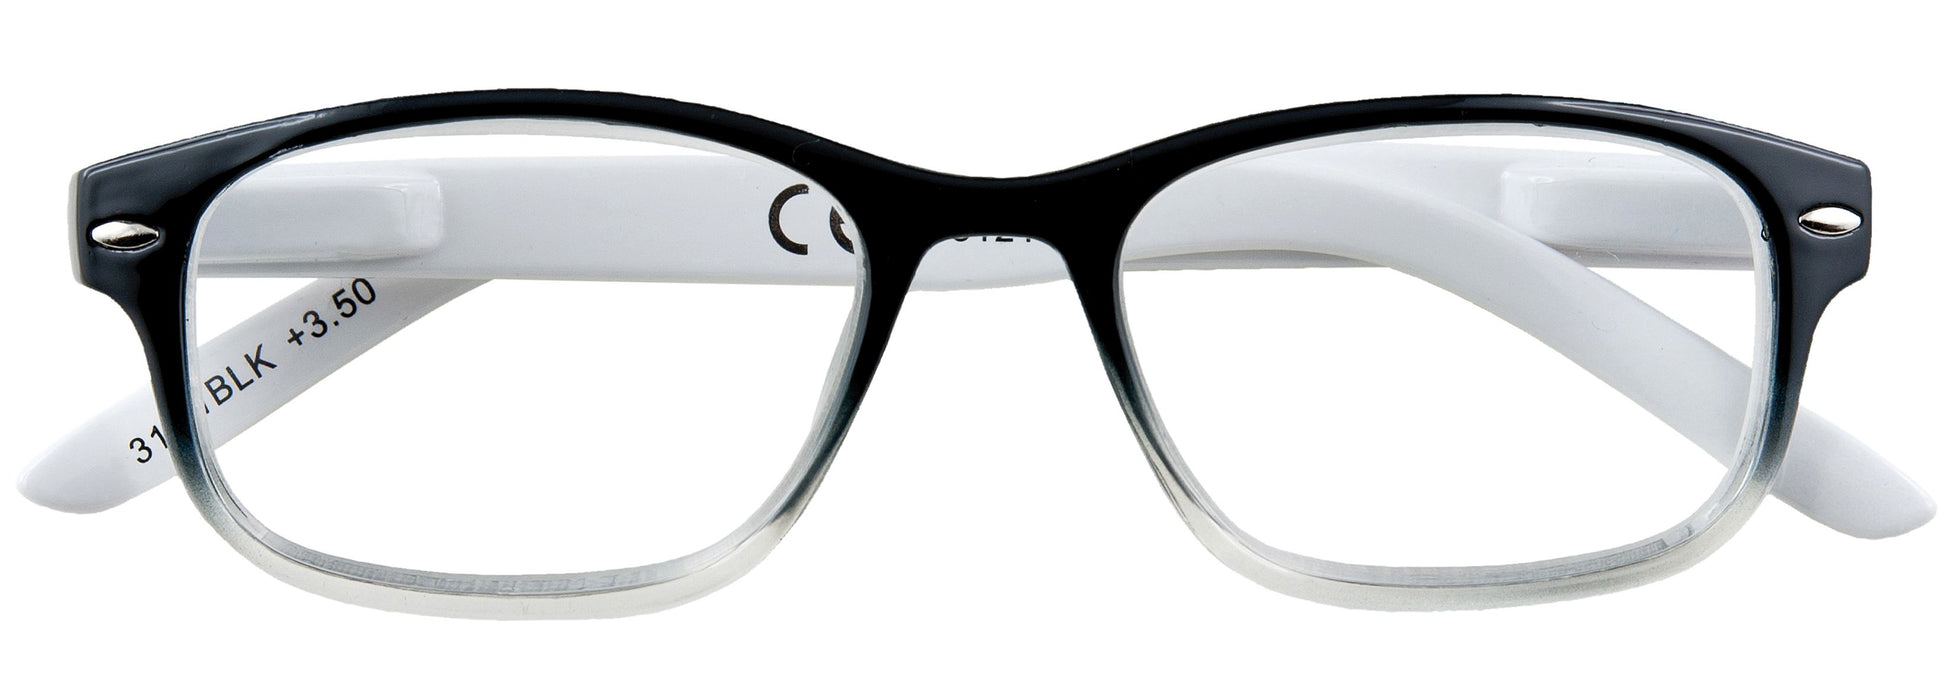 ZIPPO occhiali da lettura +2.50 31Z-B1-BLK250